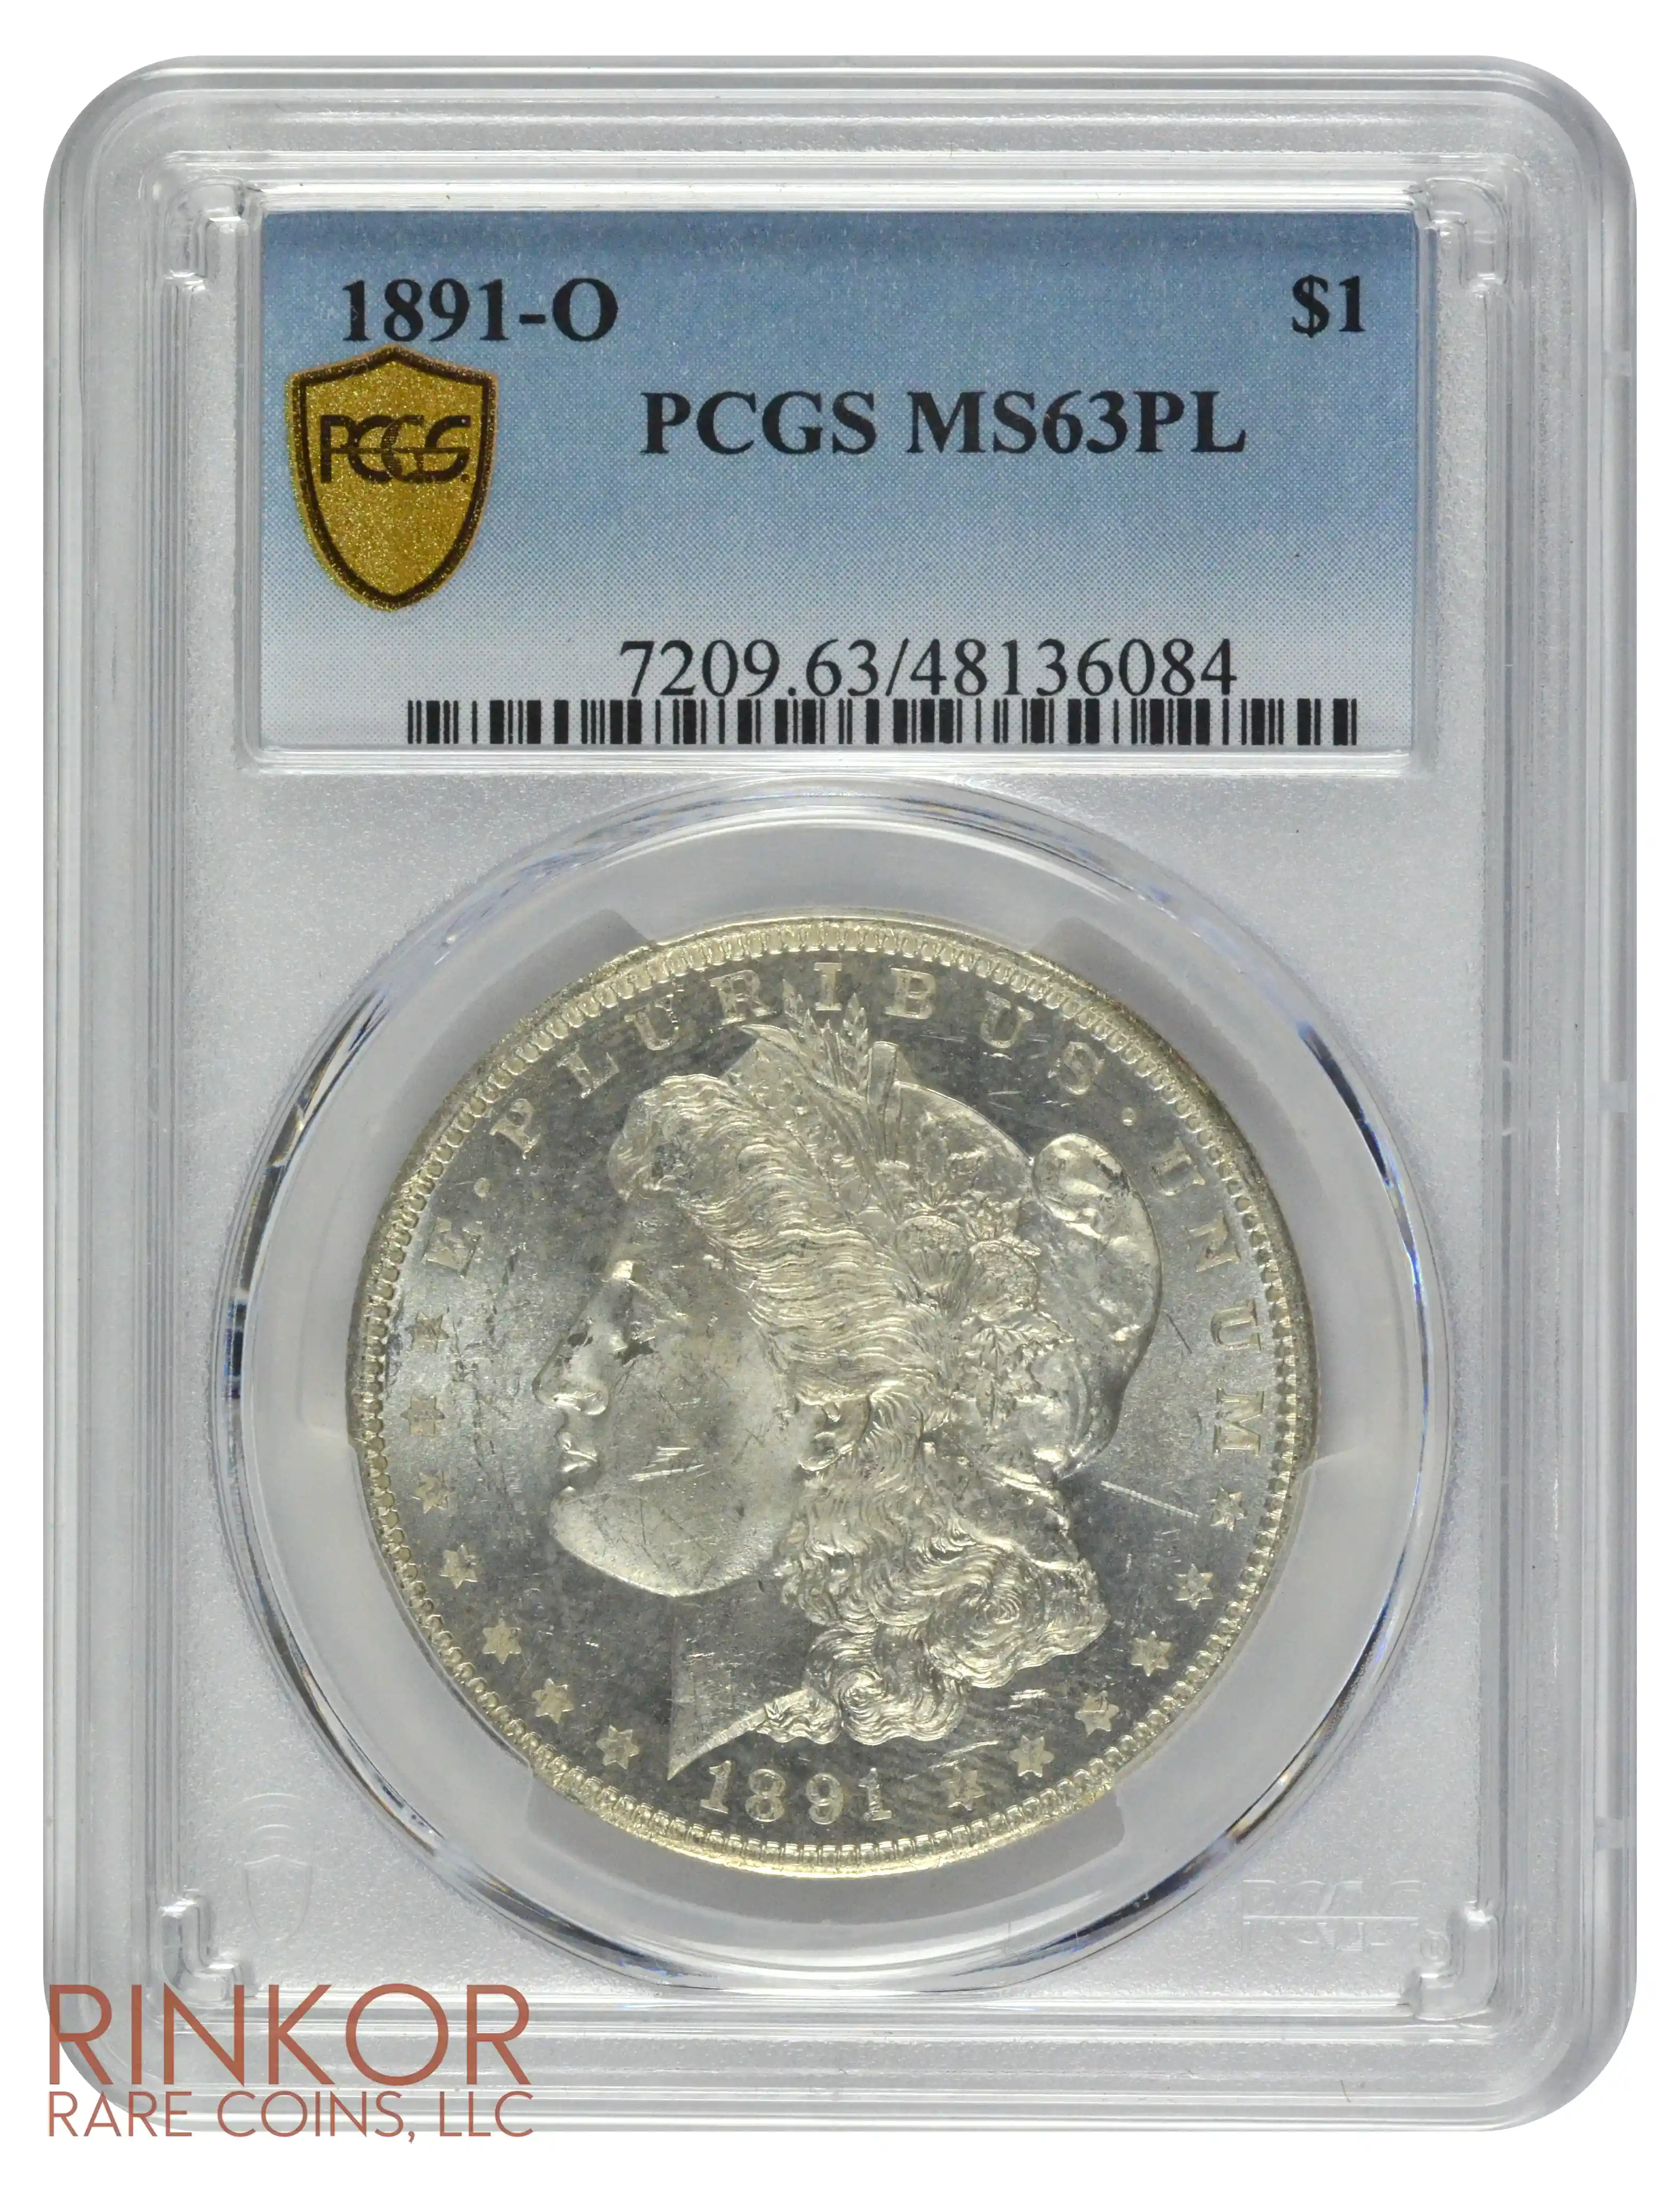 1891-O $1 PCGS MS 63 PL